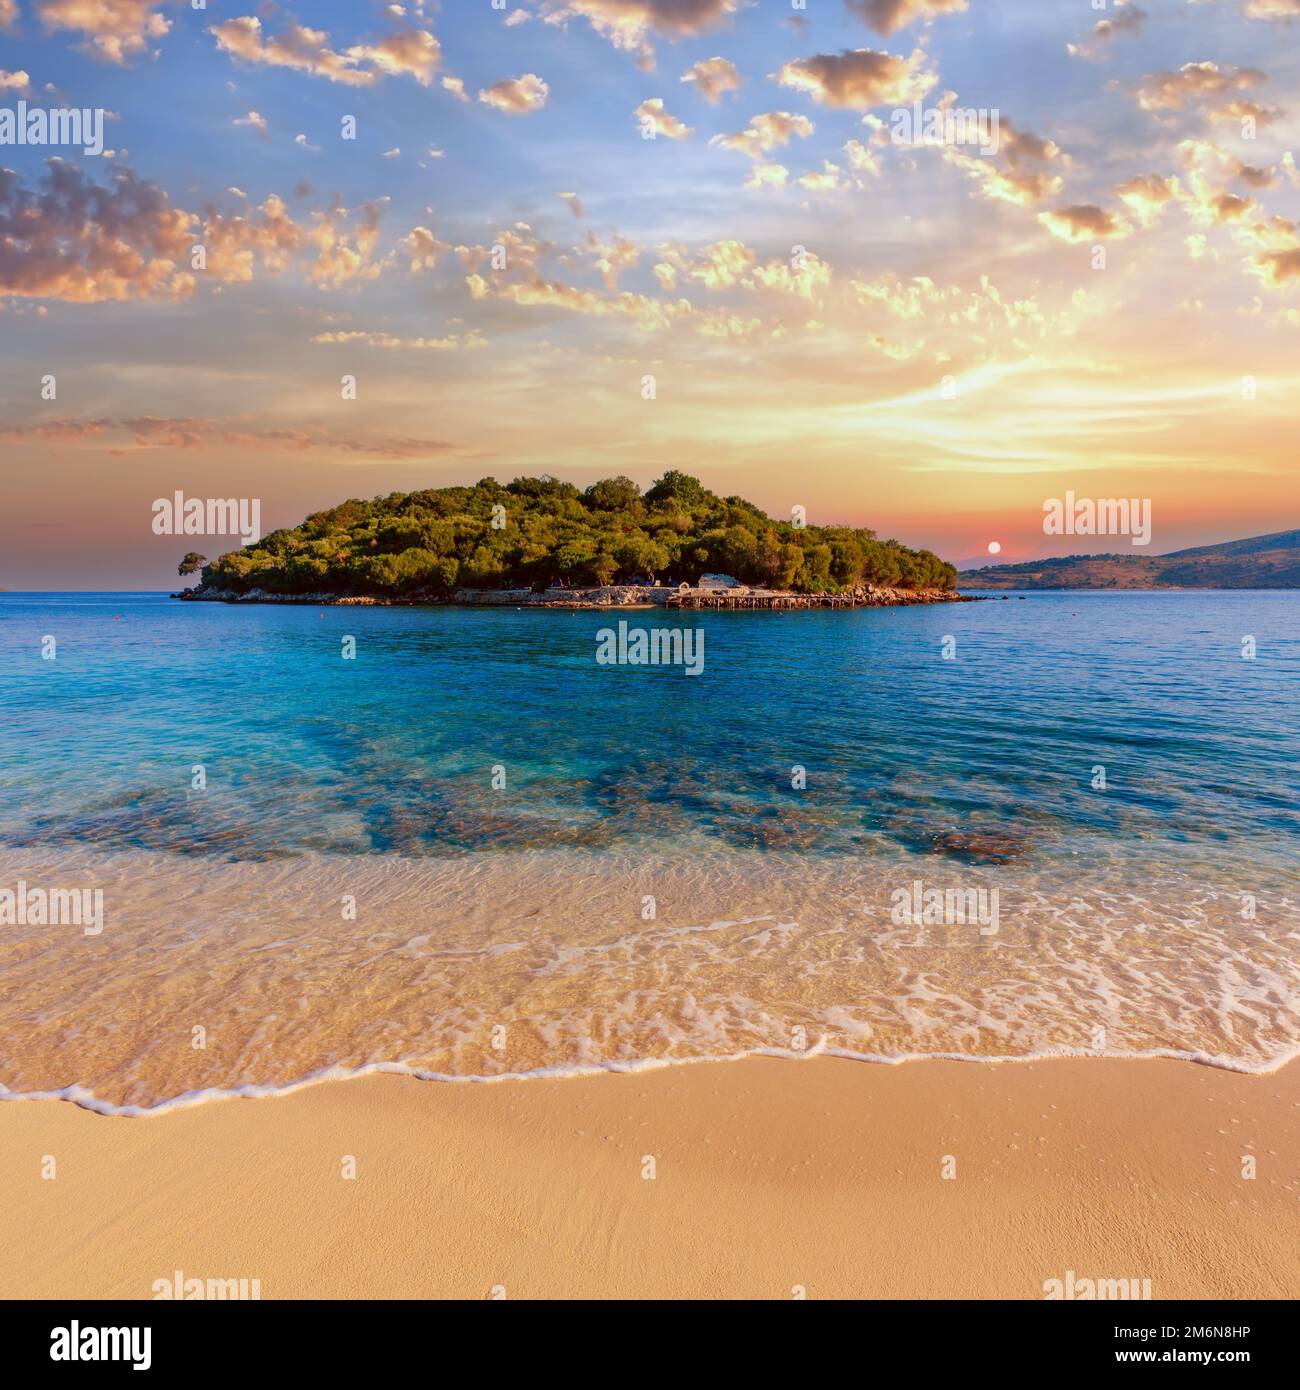 Ksamil beach, Albania Stock Photo - Alamy